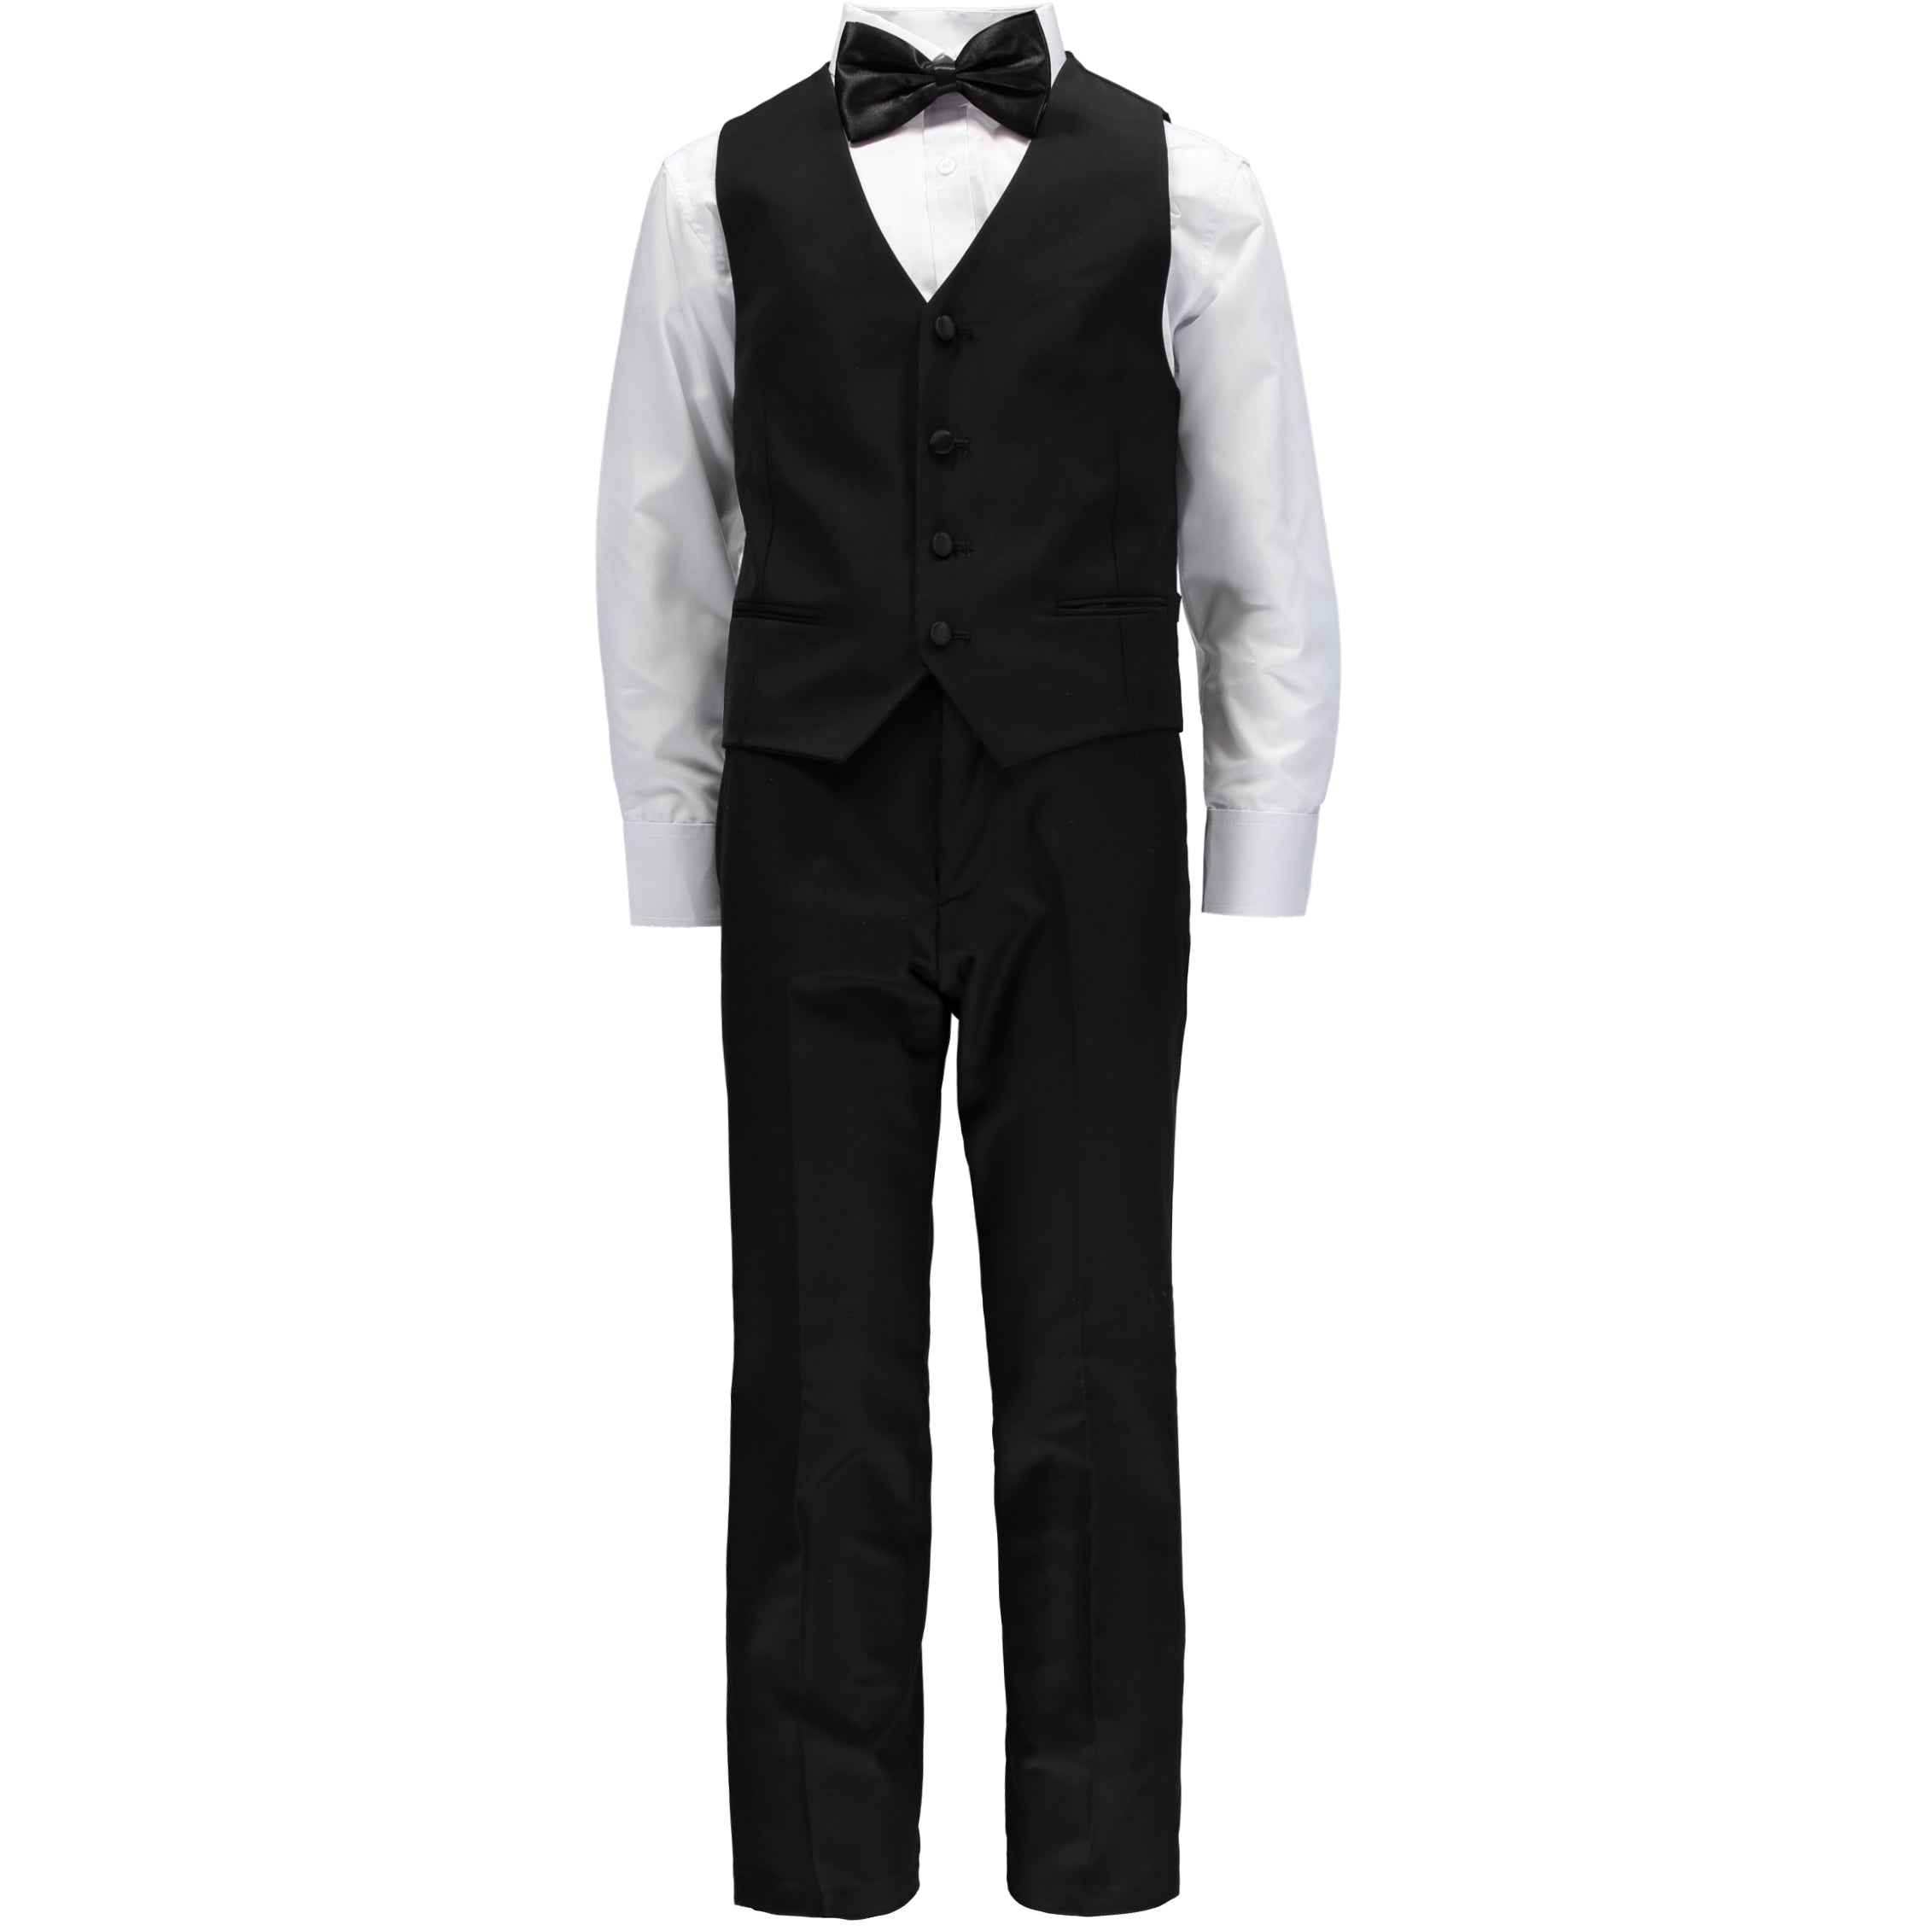 Kids World of USA Boys 2T-20 Tuxedo 5-Piece Suit